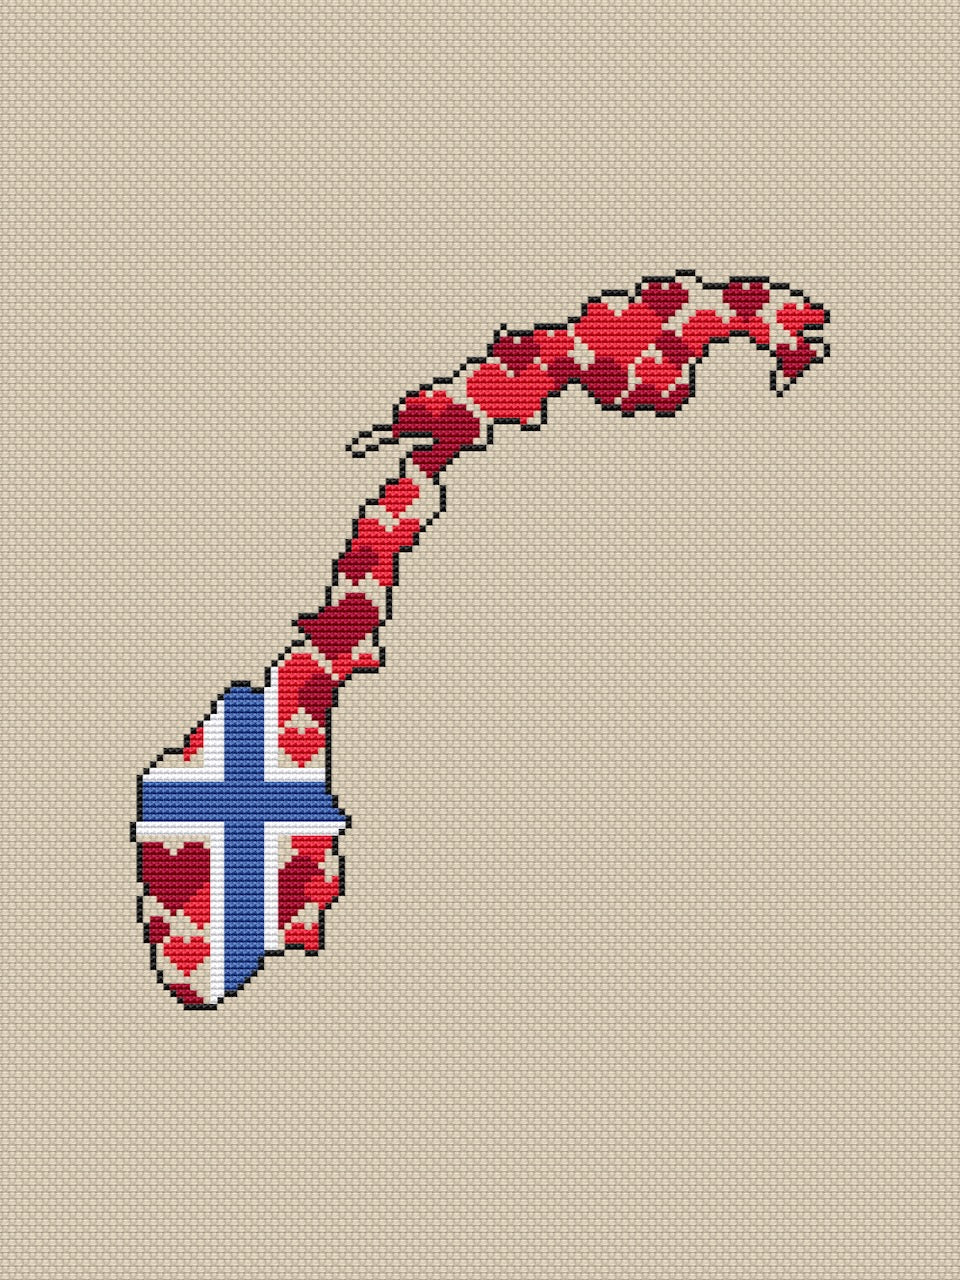 Norway flag cross stitch pattern